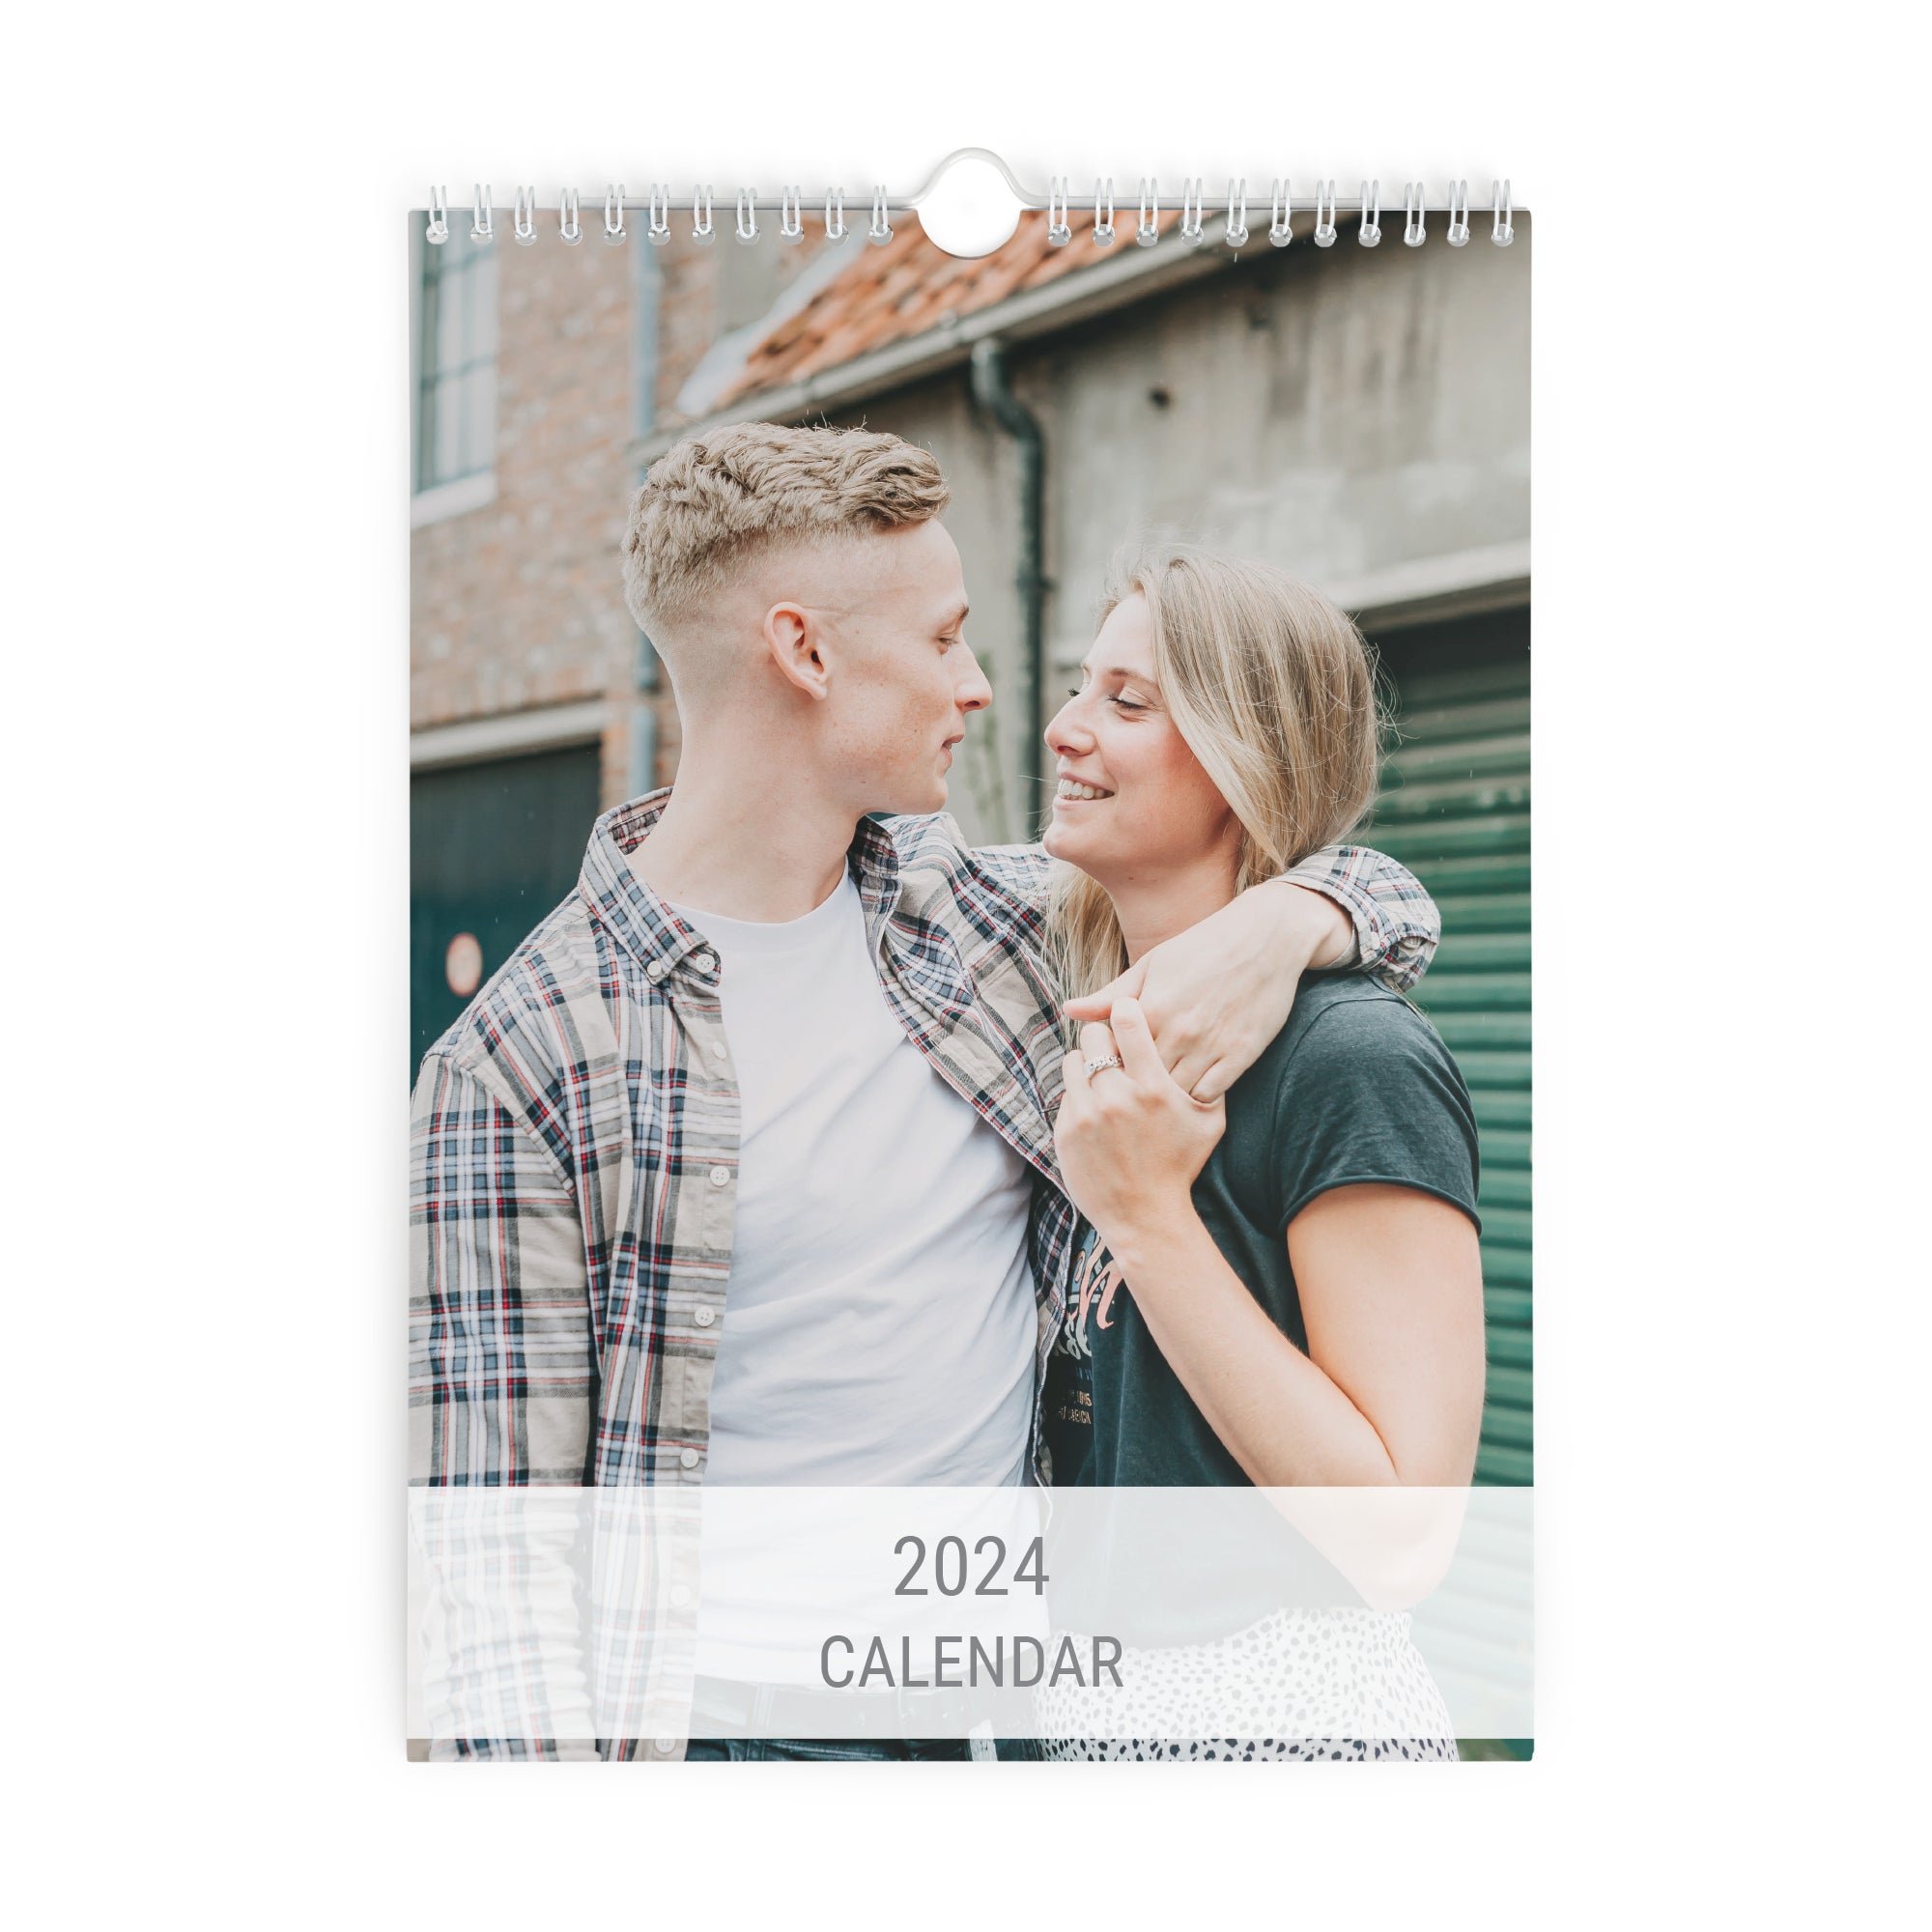 Printed Calendar for 2024 - Vertical